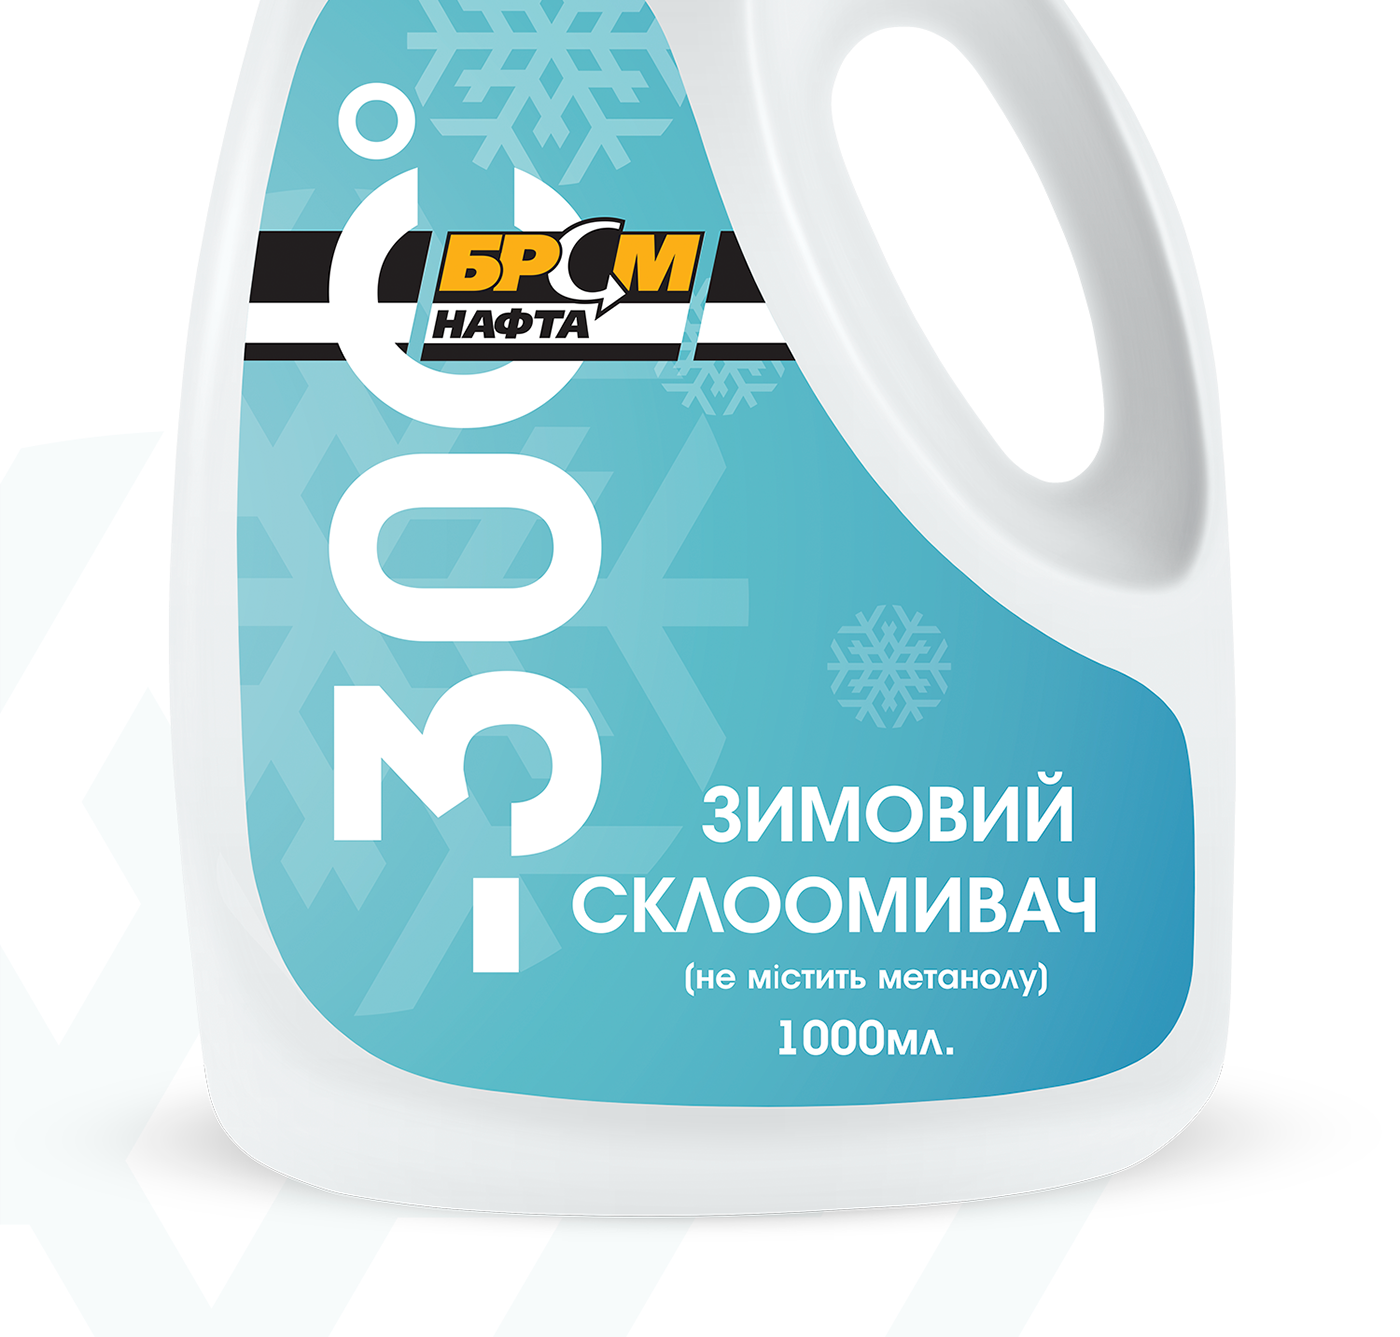 Viacheslav Abramov Abramov этикетка дизайн графика petrol BRSM brom ua oil топливо украина